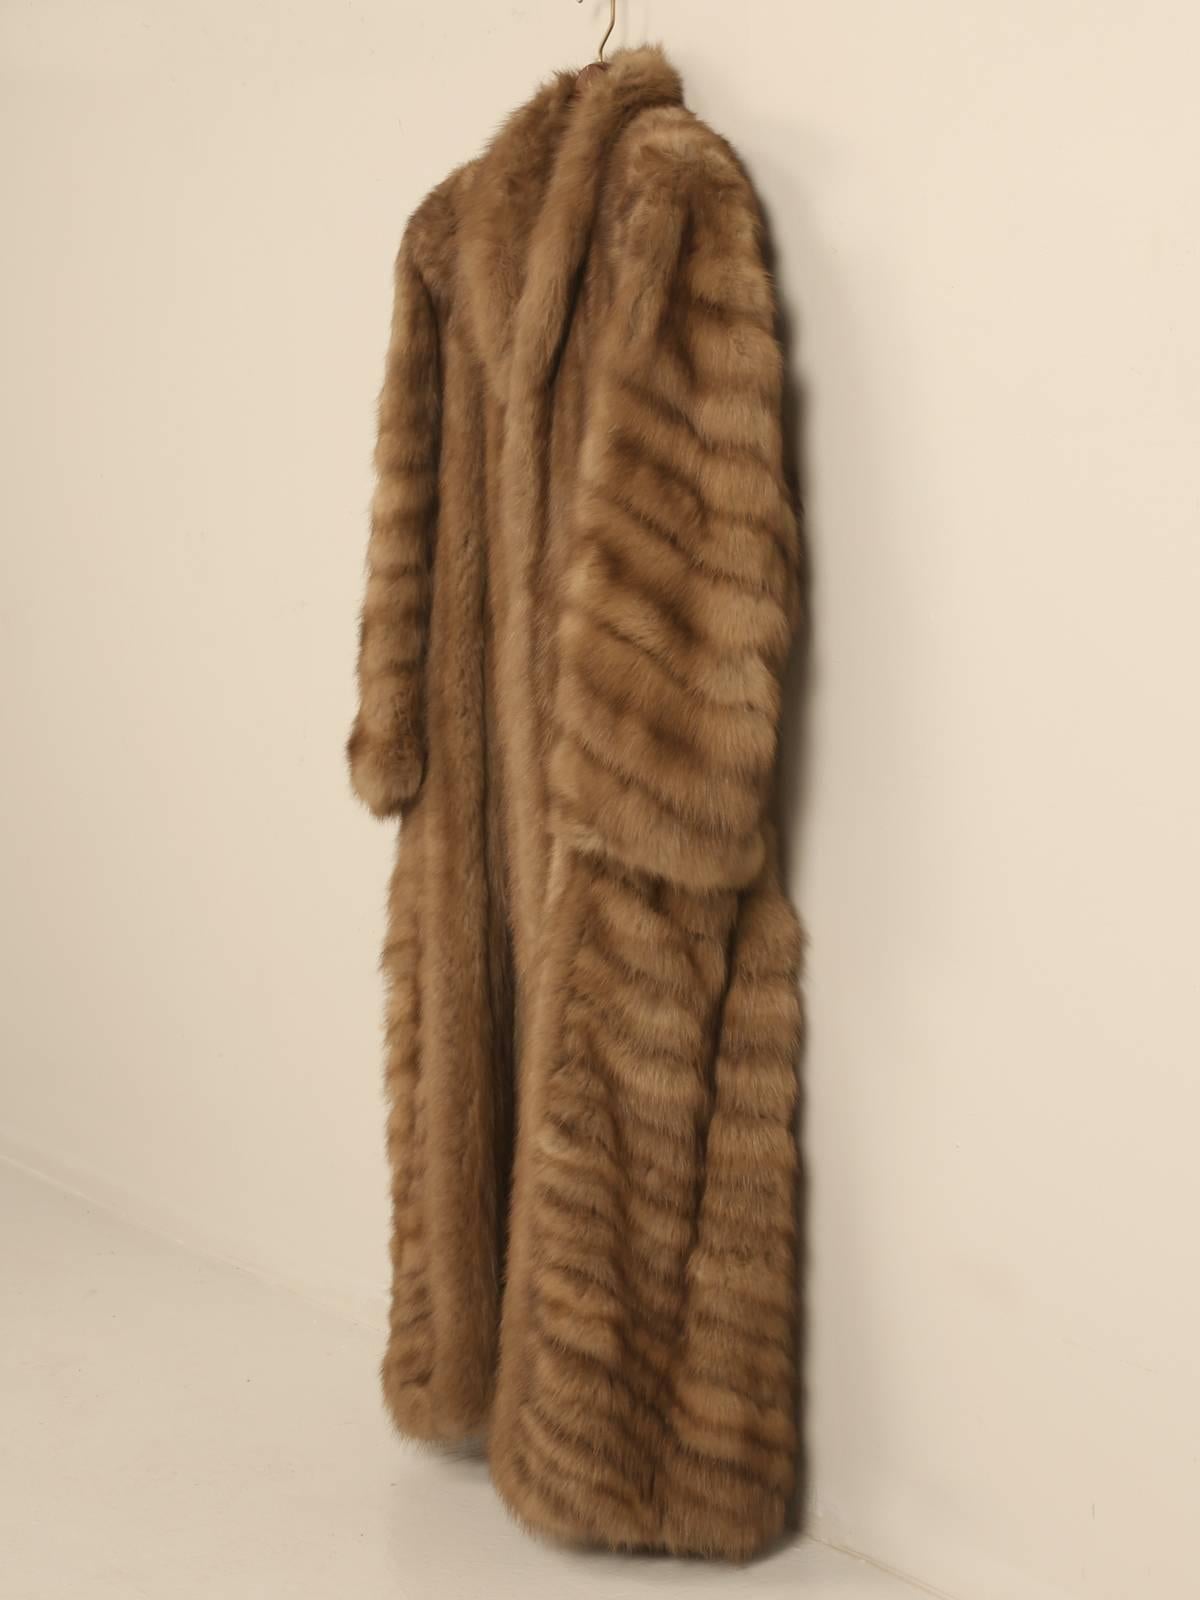 The shoulder width of the Bob Mackie Sable Fur coat is 19